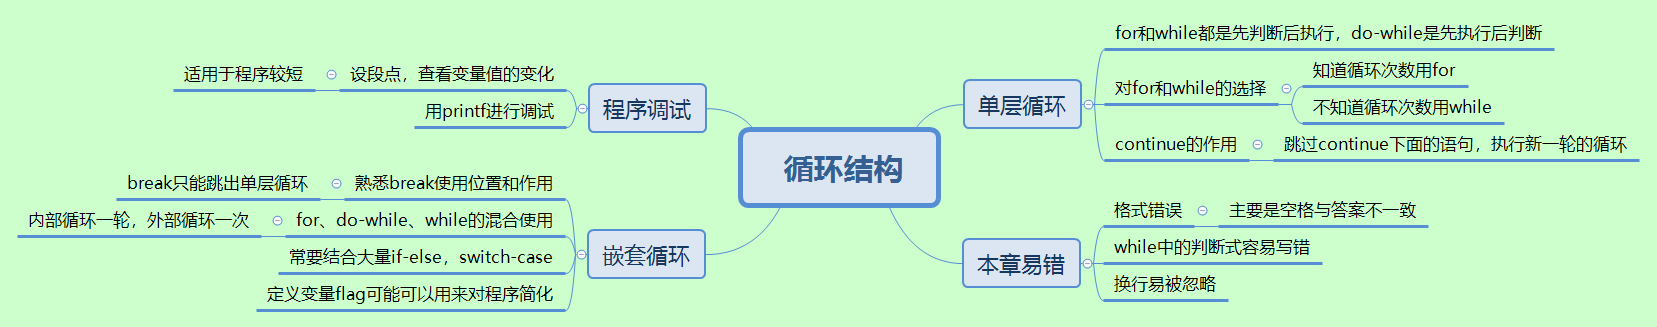 C语言博客作业2--循环结构